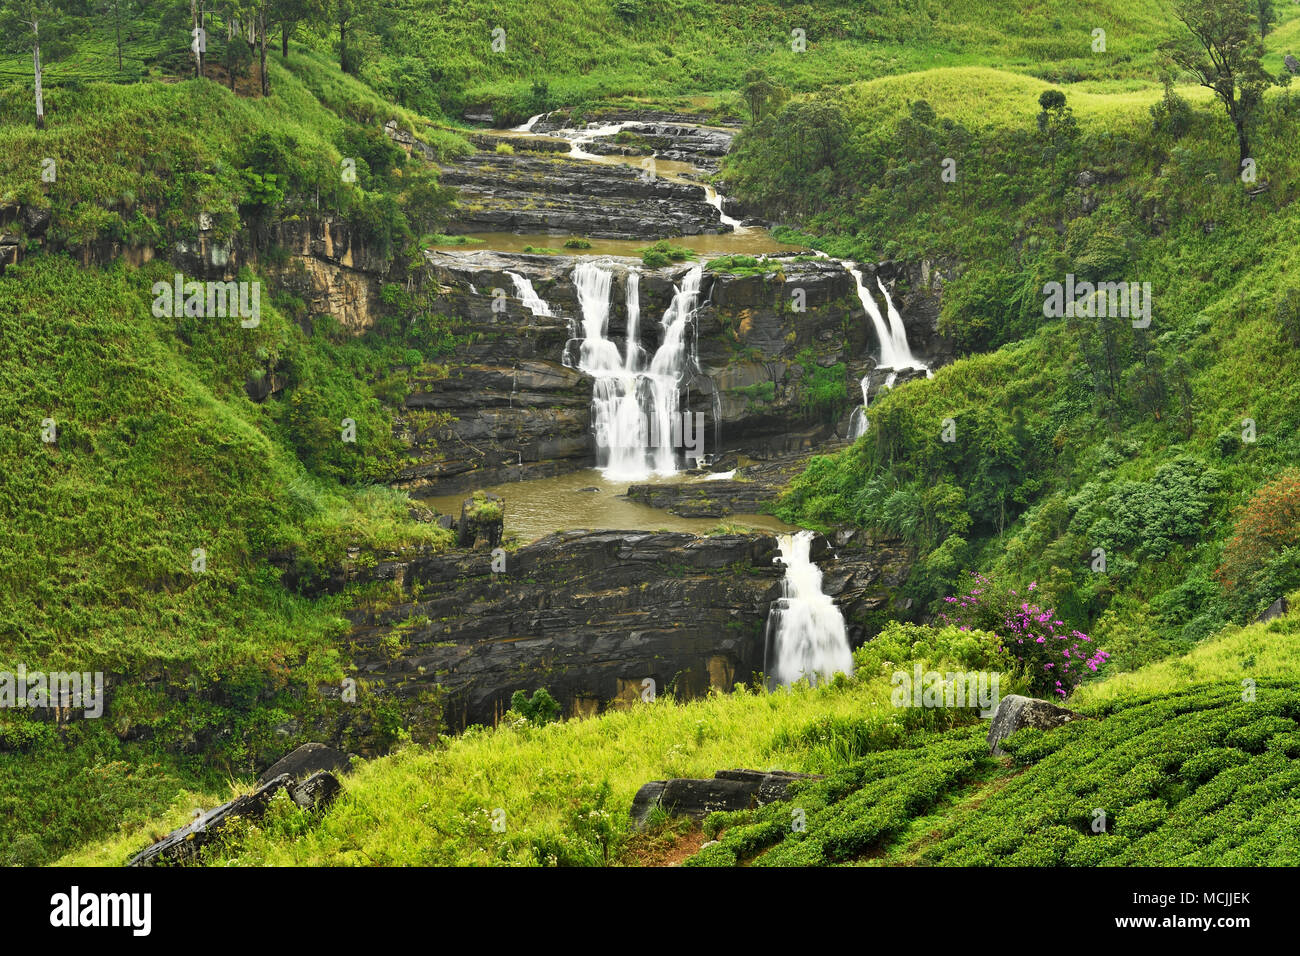 St Clair's Falls, Highlands Centrali, Talawakale, Sri Lanka Foto Stock